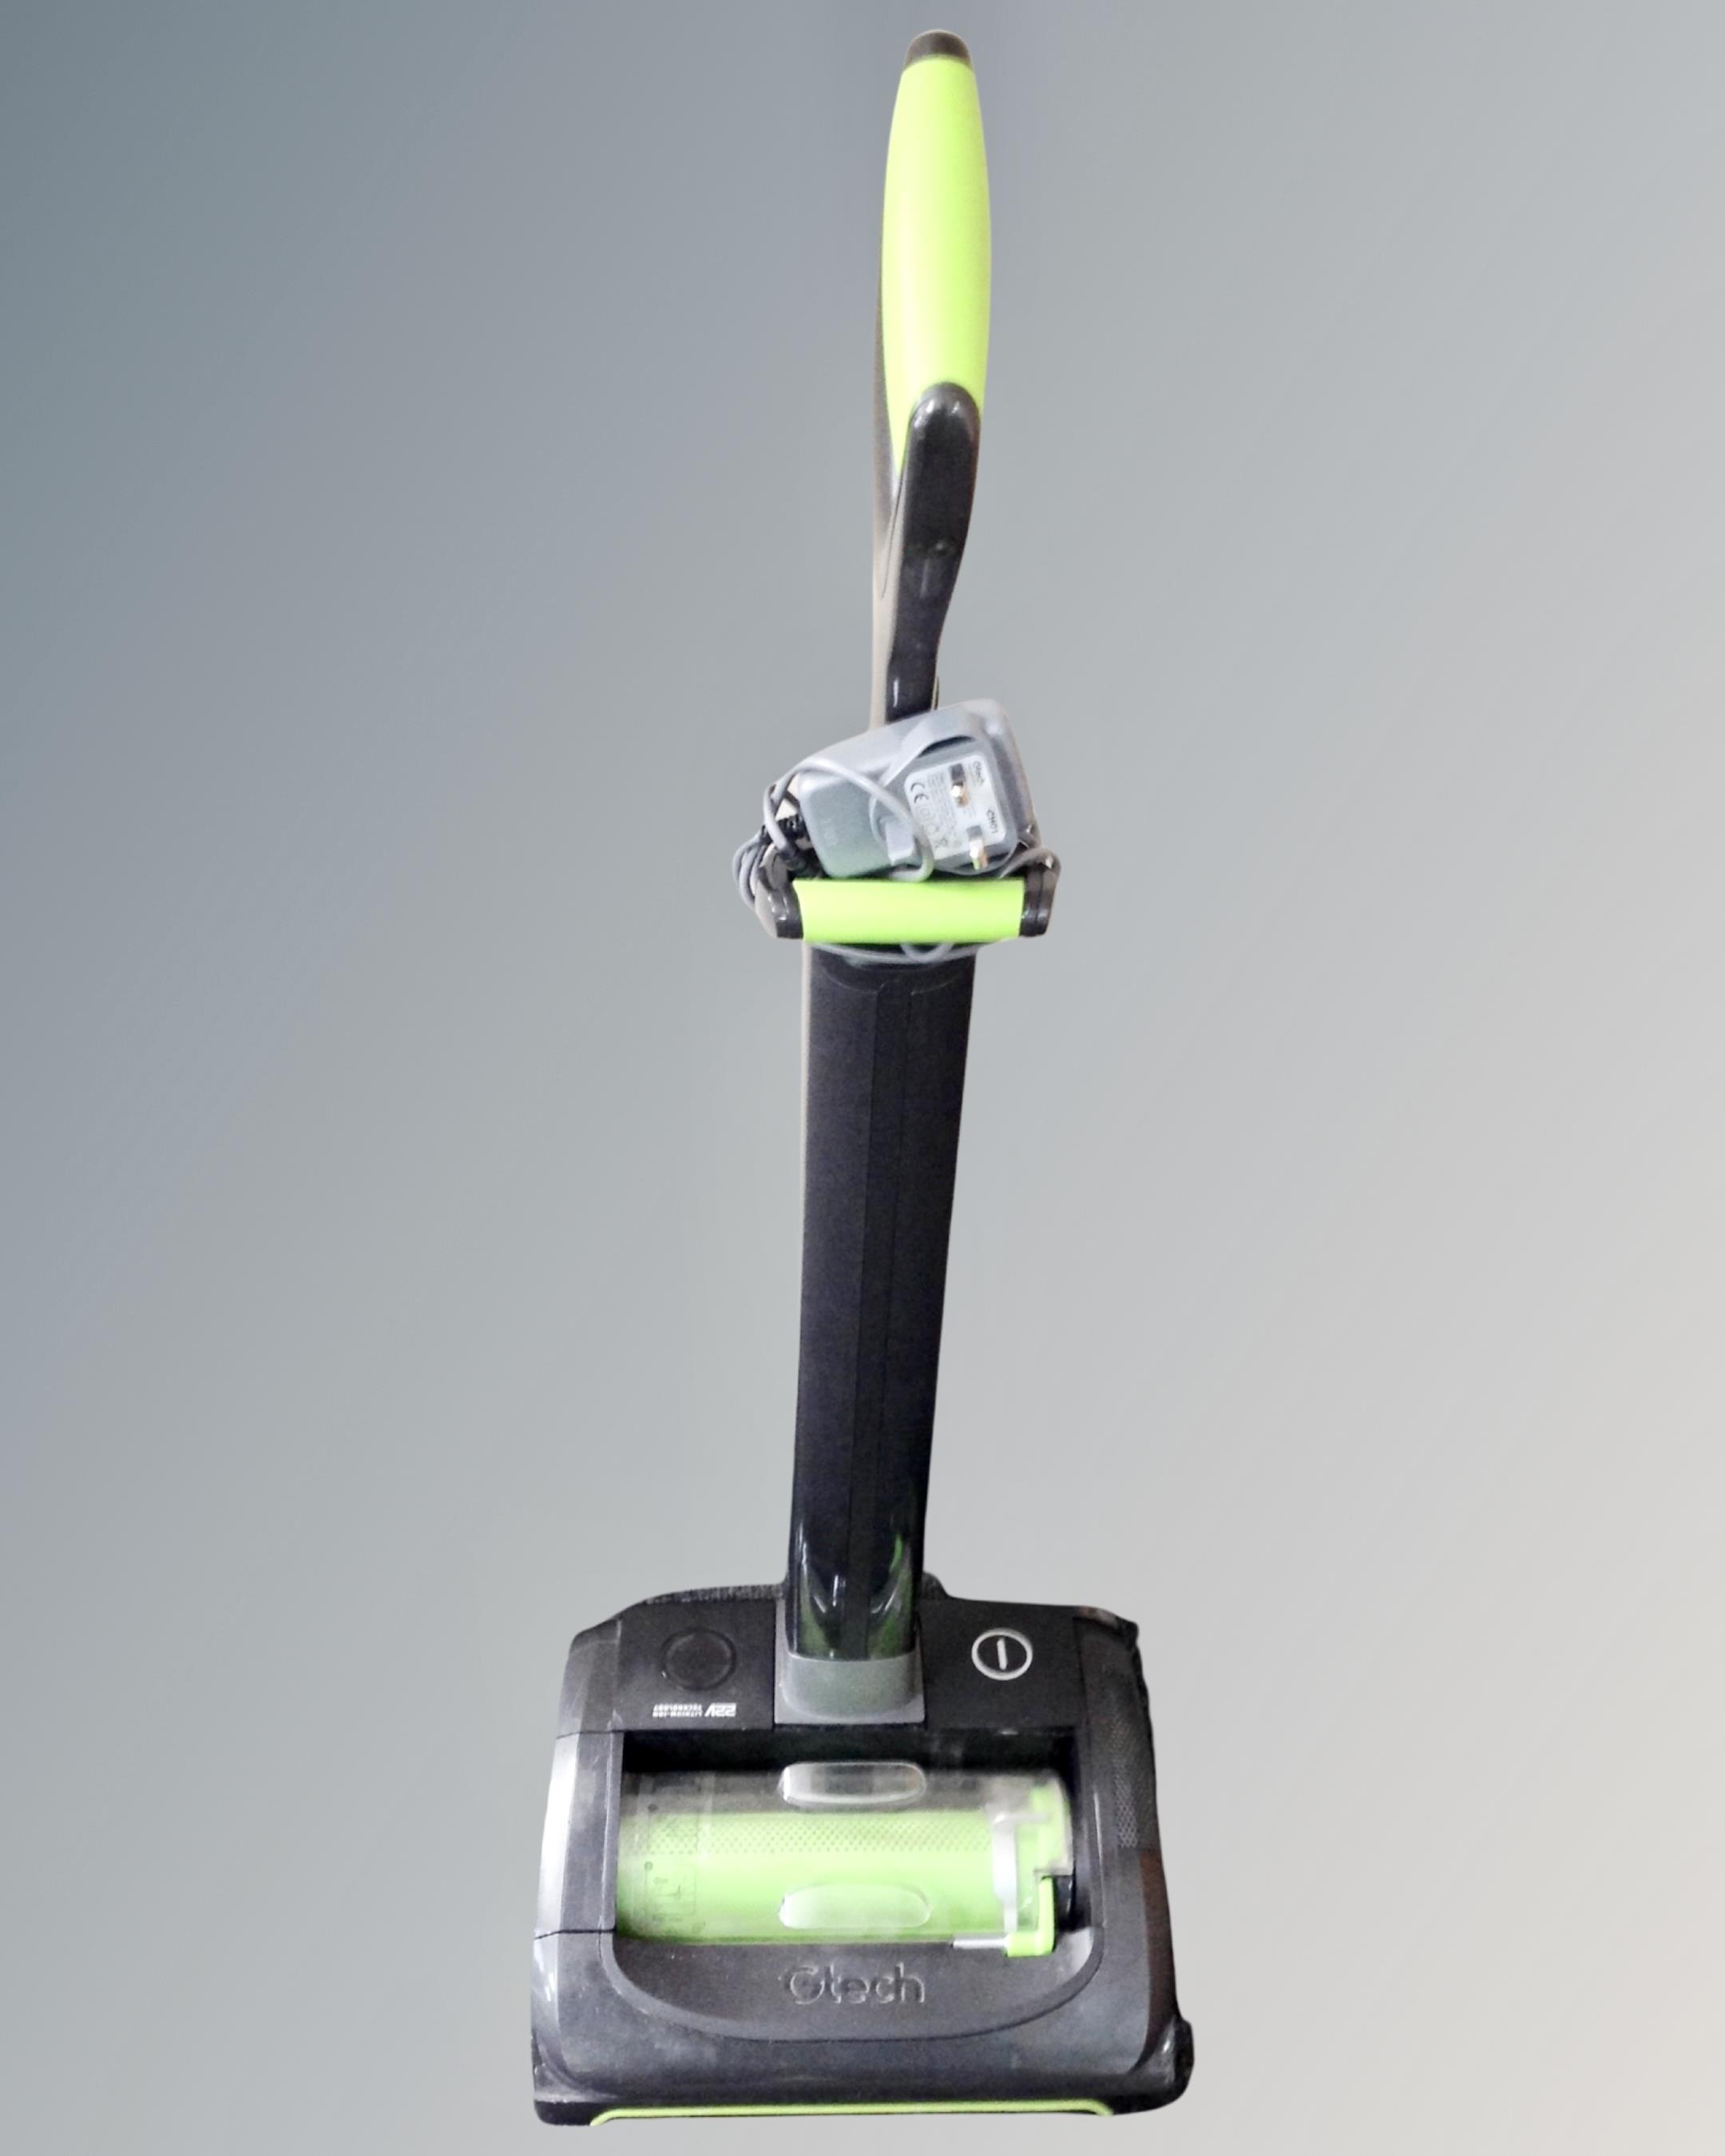 A Gtech Air Ram K9 cordless electric vacuum.